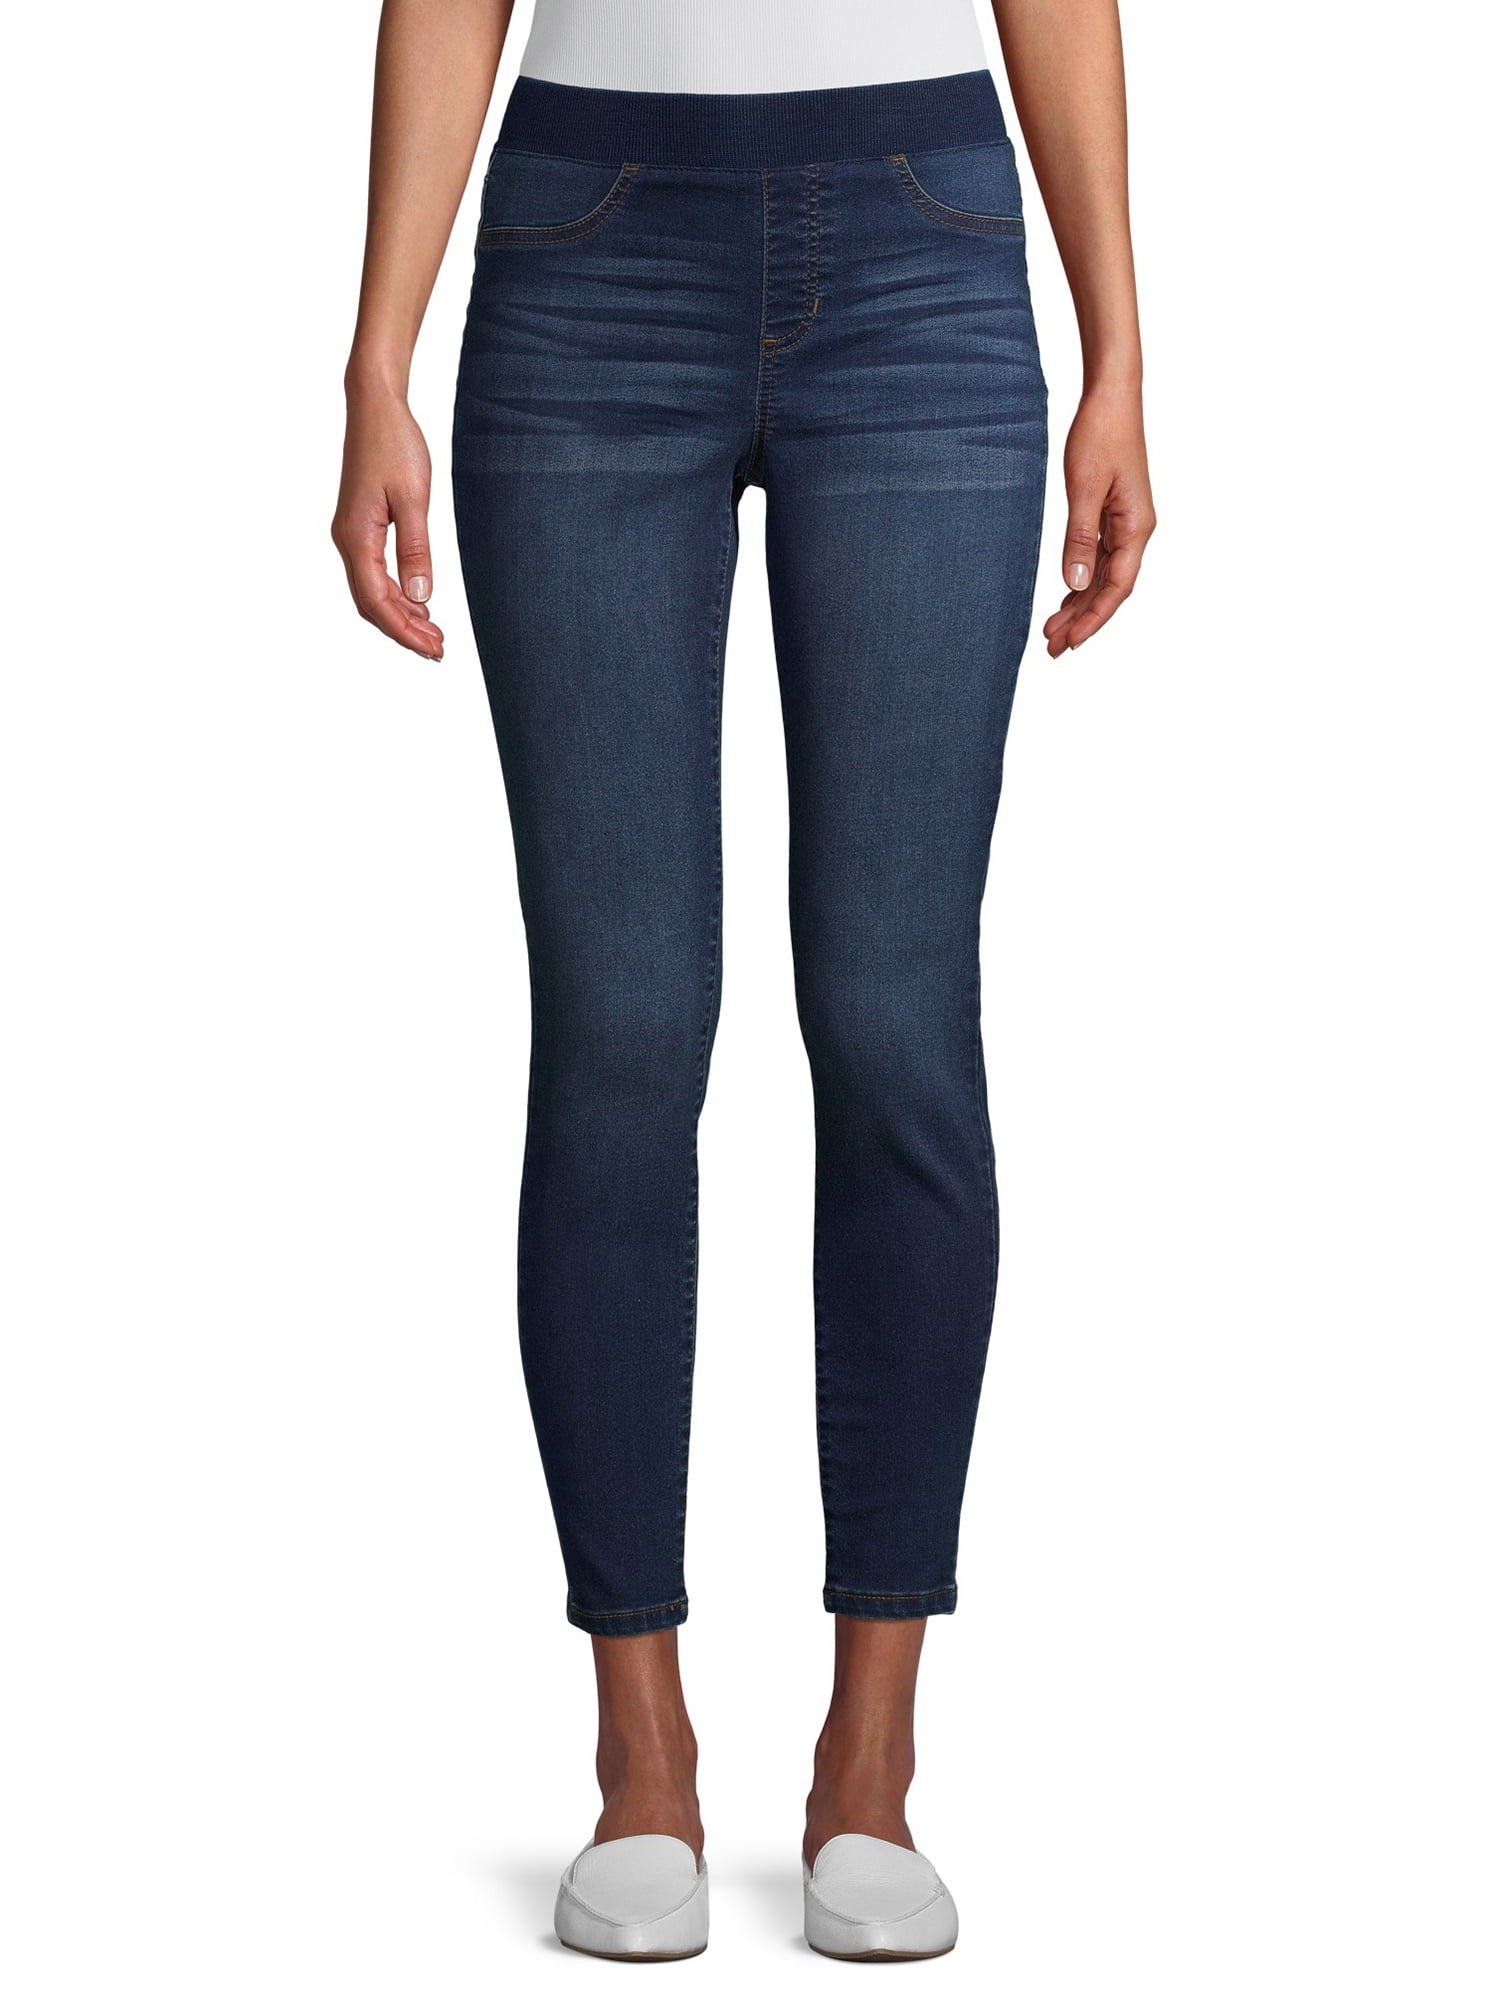 Buy online Mid Waist Denim Jegging from Jeans & jeggings for Women by La  Fem for ₹689 at 47% off